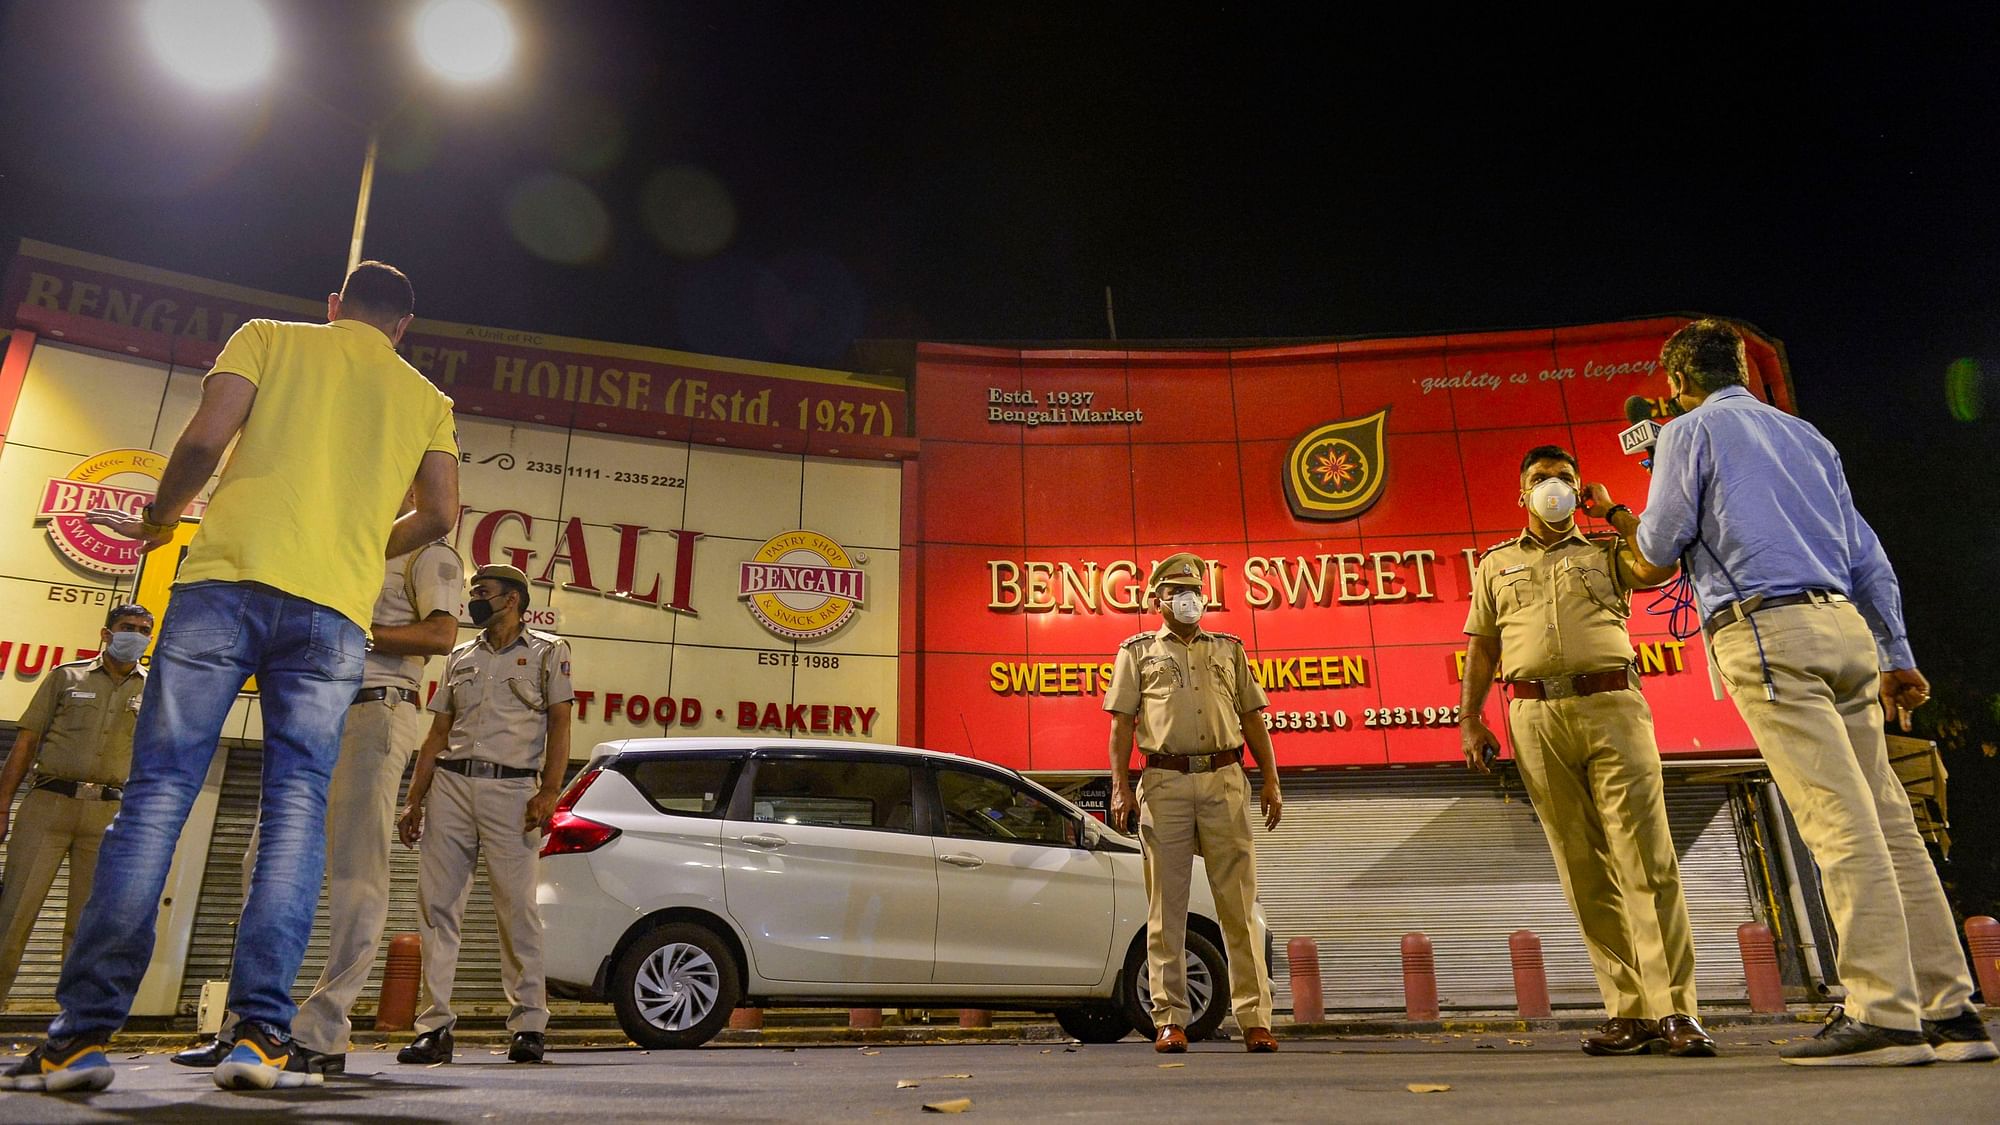 Delhi’s Bengali Market Sealed Over 3 COVID-19 Cases, Pastry Shop Under Scanner.